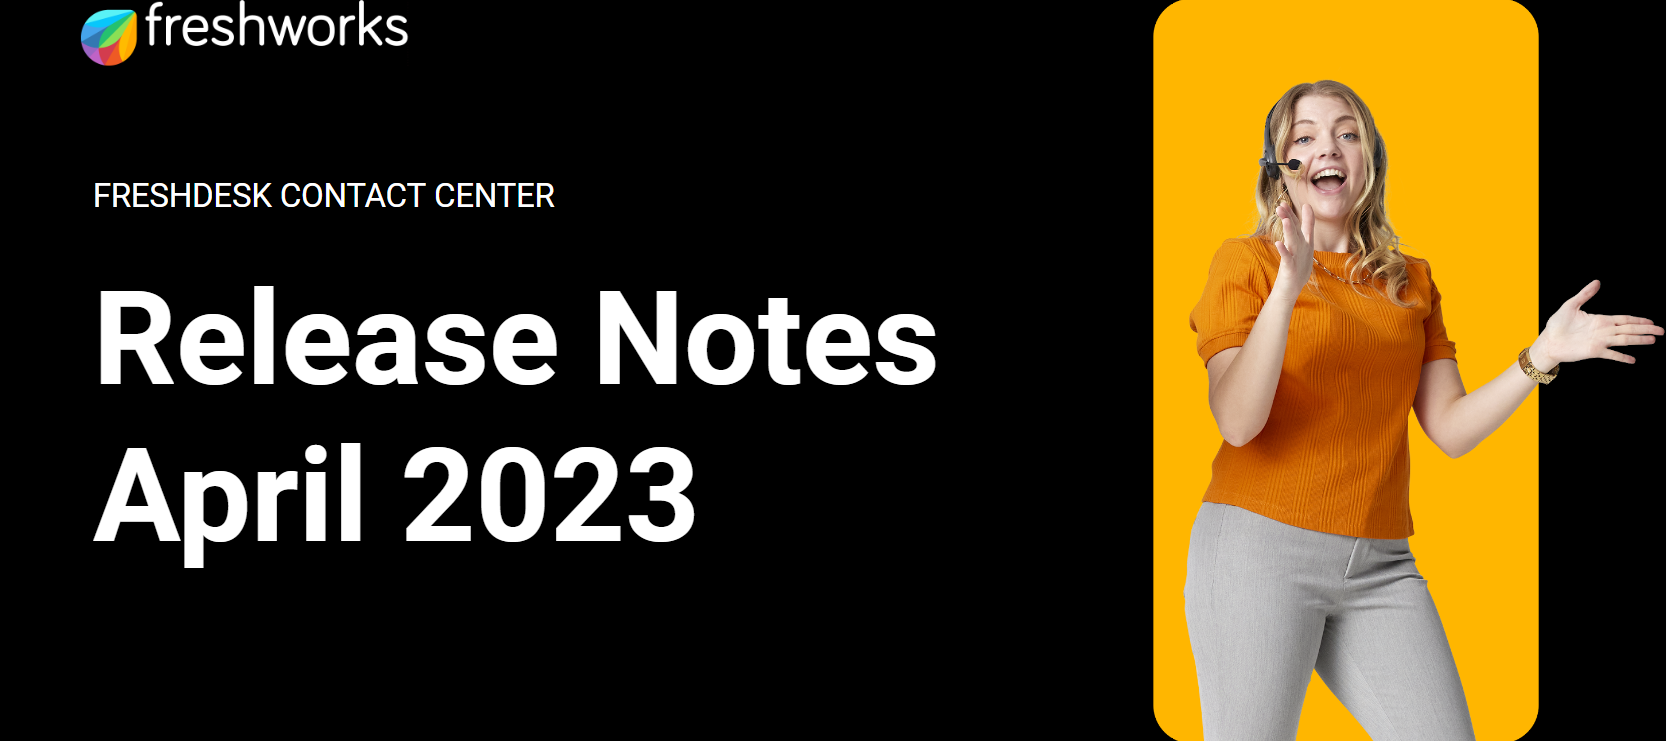 Freshdesk Contact Center Release Notes - April 2023